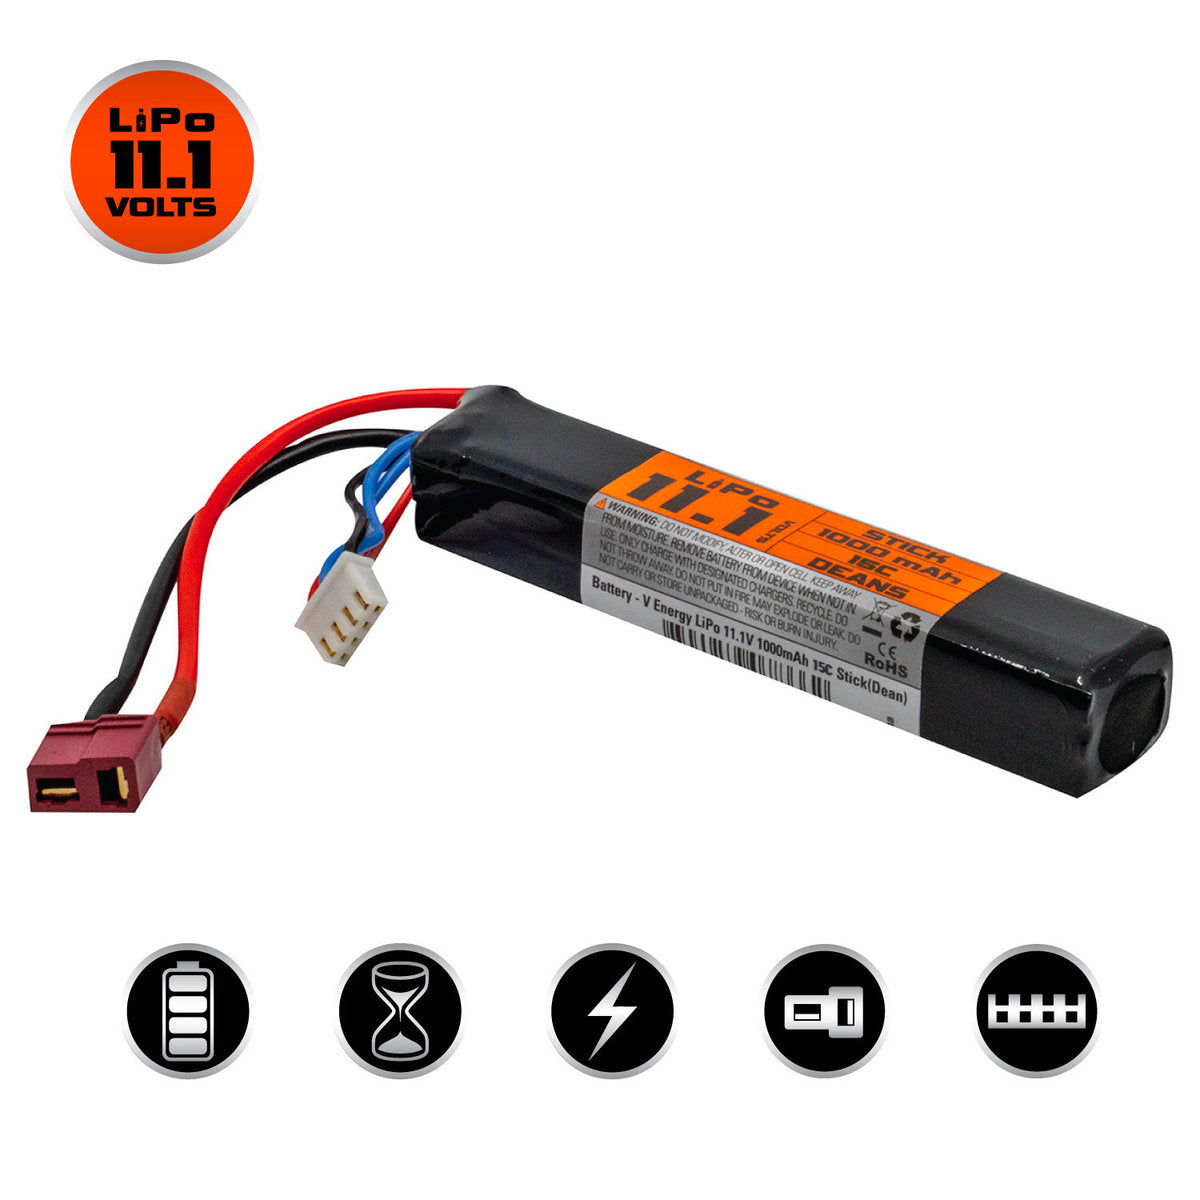 Valken LiPo 11.1v 1000mAh 15C/30C Stick Airsoft Battery (Dean)